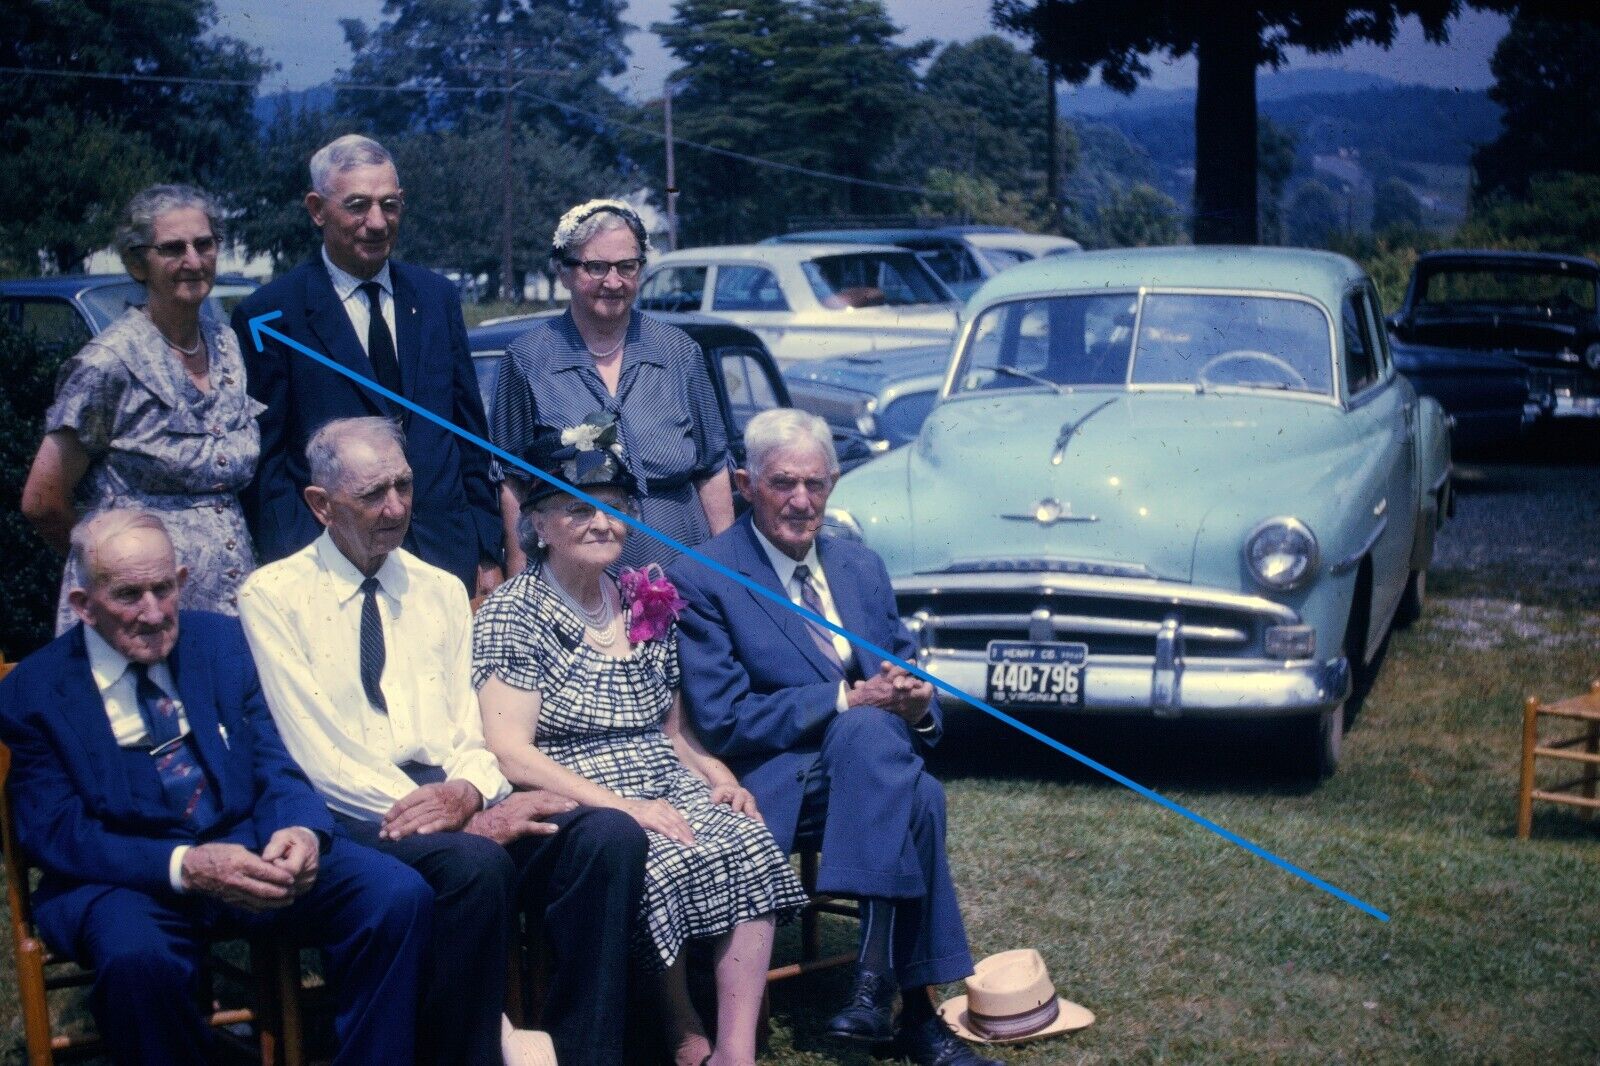 1962 2X 35mm Slides Henry County Virginia Family Reunion Seniors Cars #1234